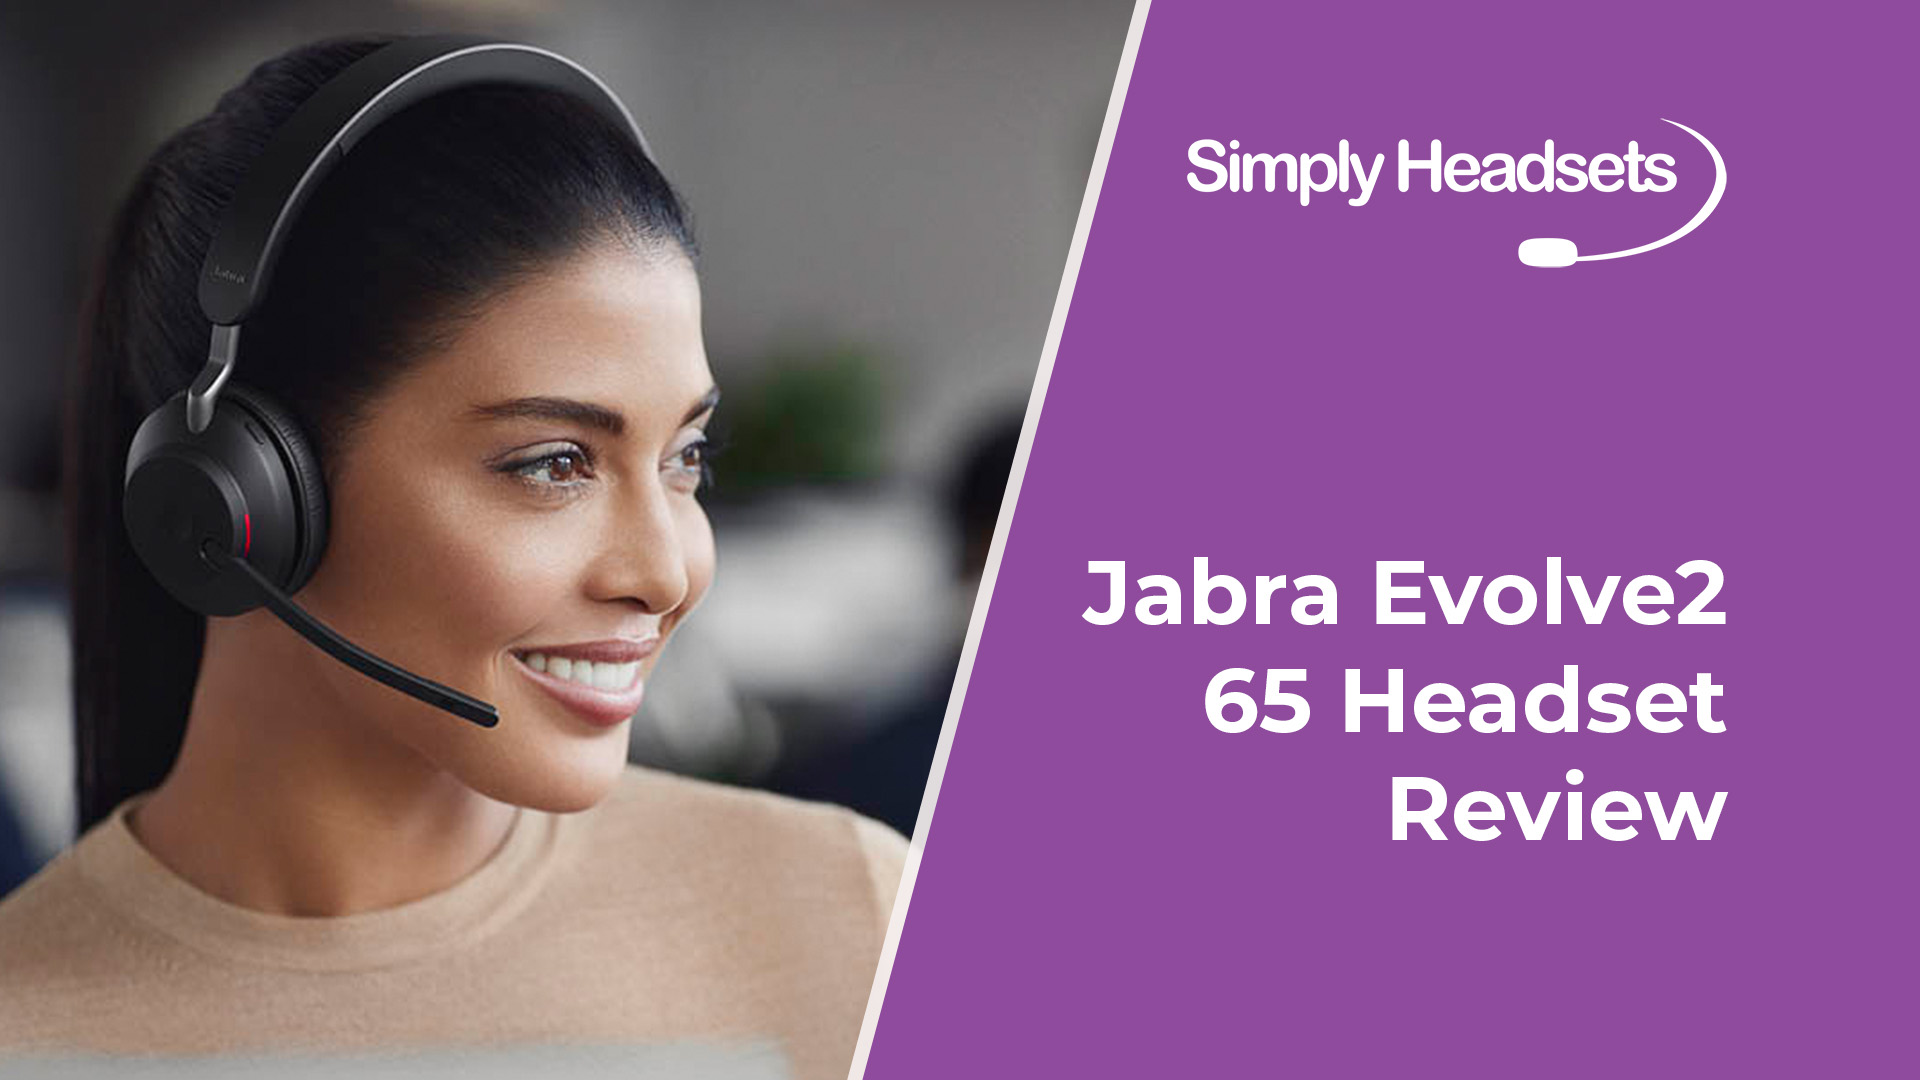 Woman wearing Jabra Evolve2 headset